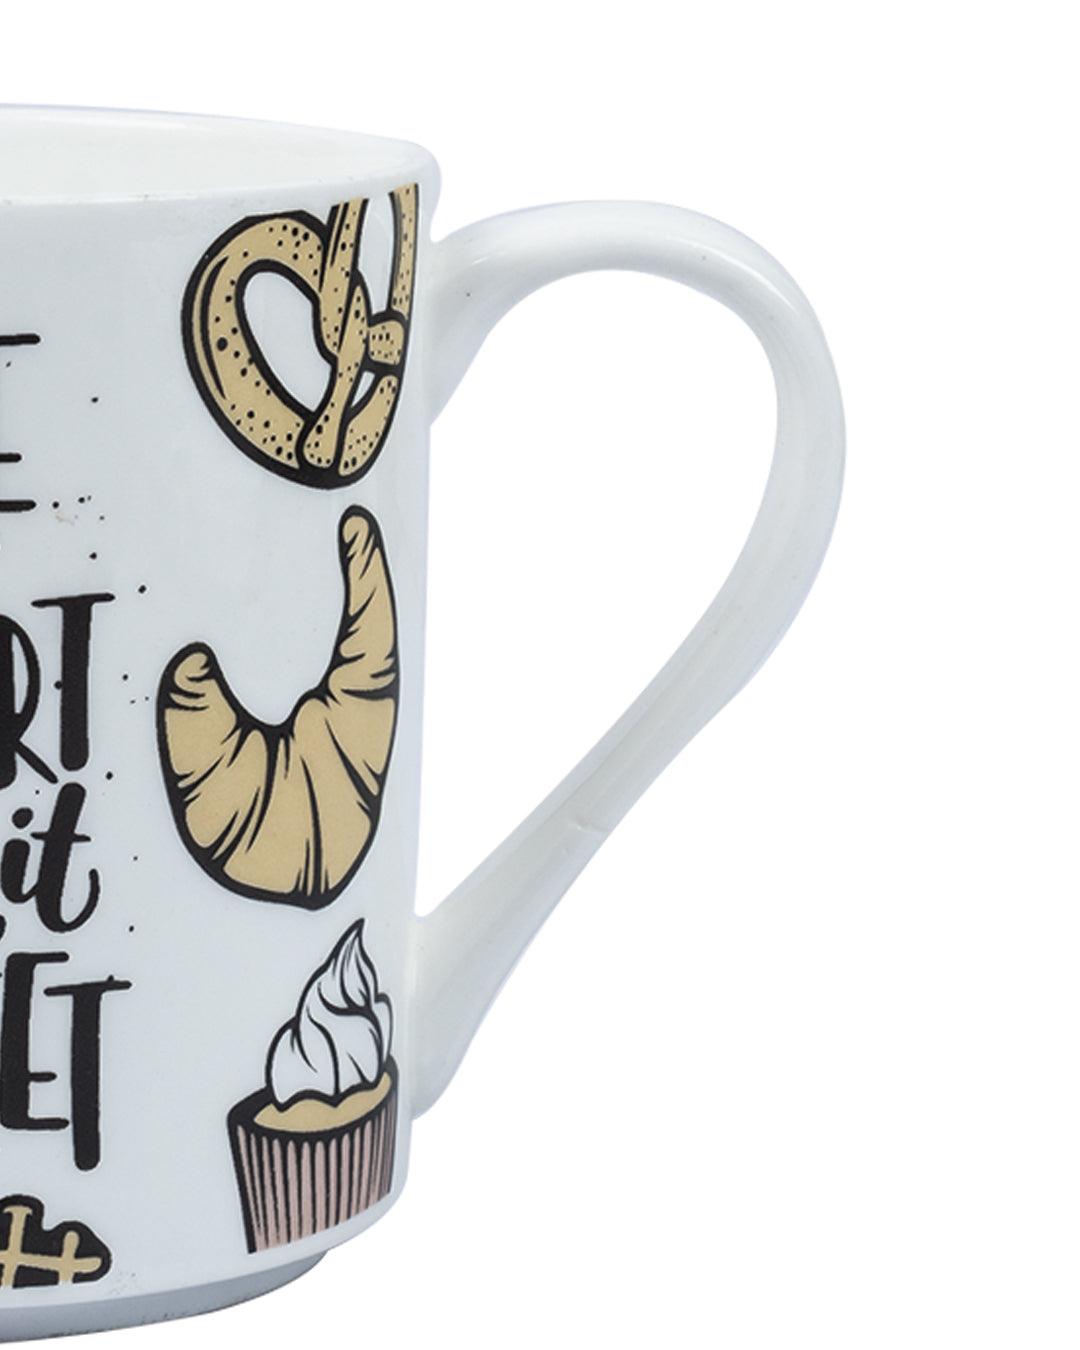 'LIFE is SHORT make it GOOD' graphic print Ceramic Milk, Tea & Coffee Mugs (Set Of 2, 340 mL) - MARKET 99